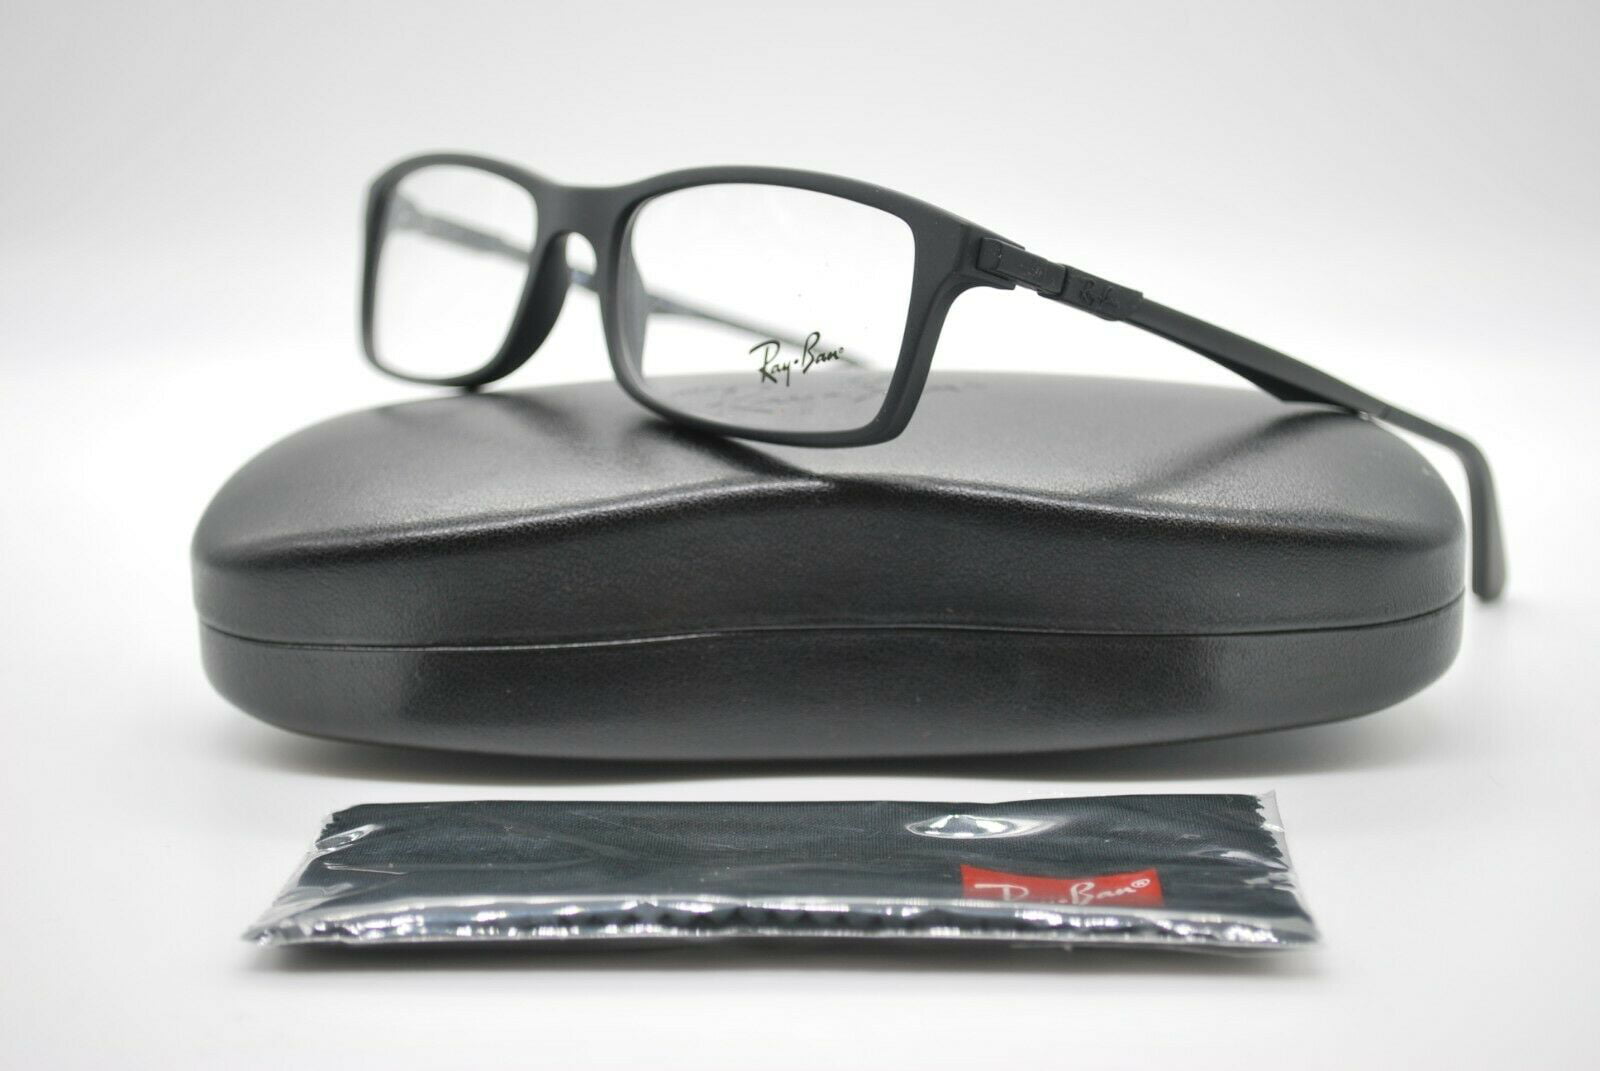 New Ray Ban Rb 7017 5196 Black Authentic Eyeglasses Frames Rx 54 17